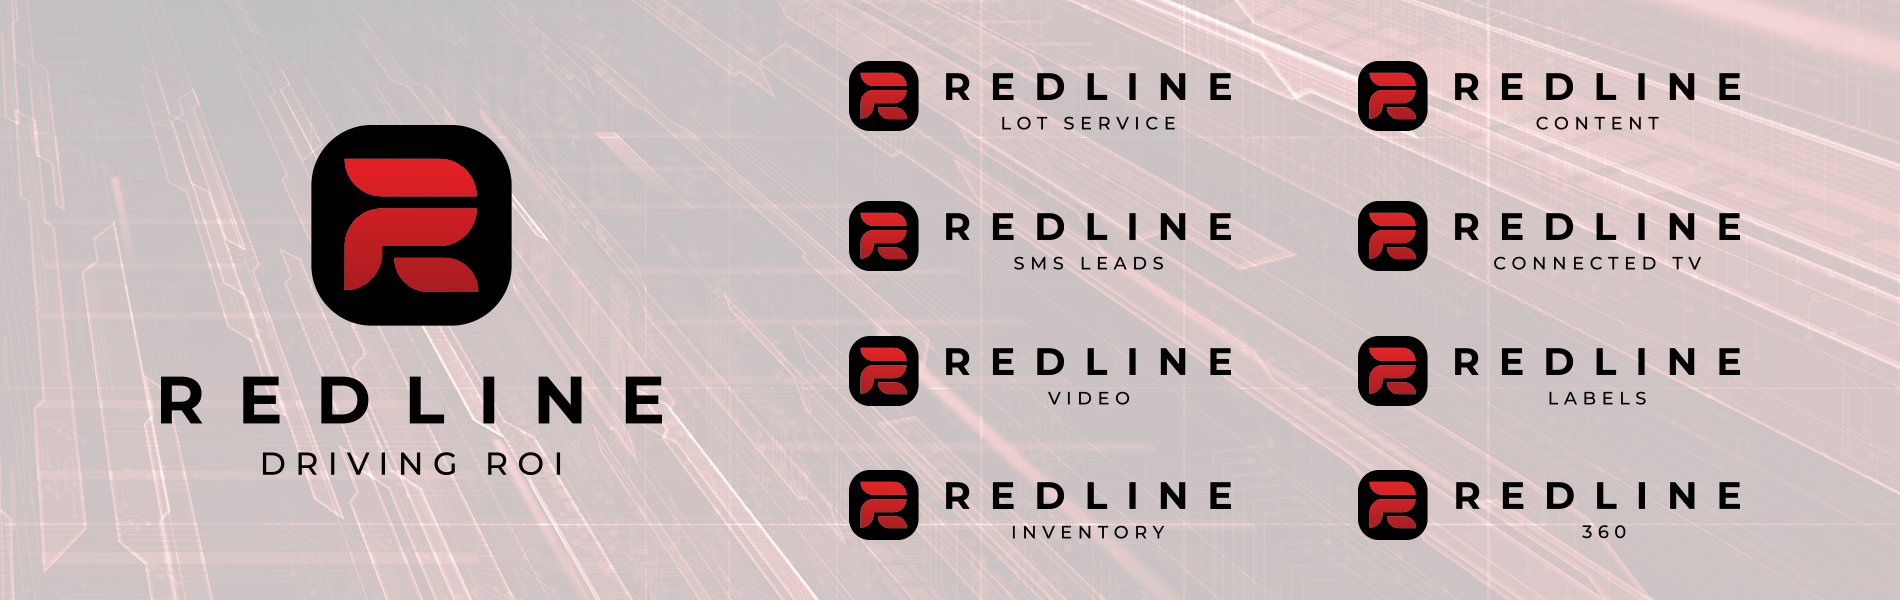 Redline Logo Array - White